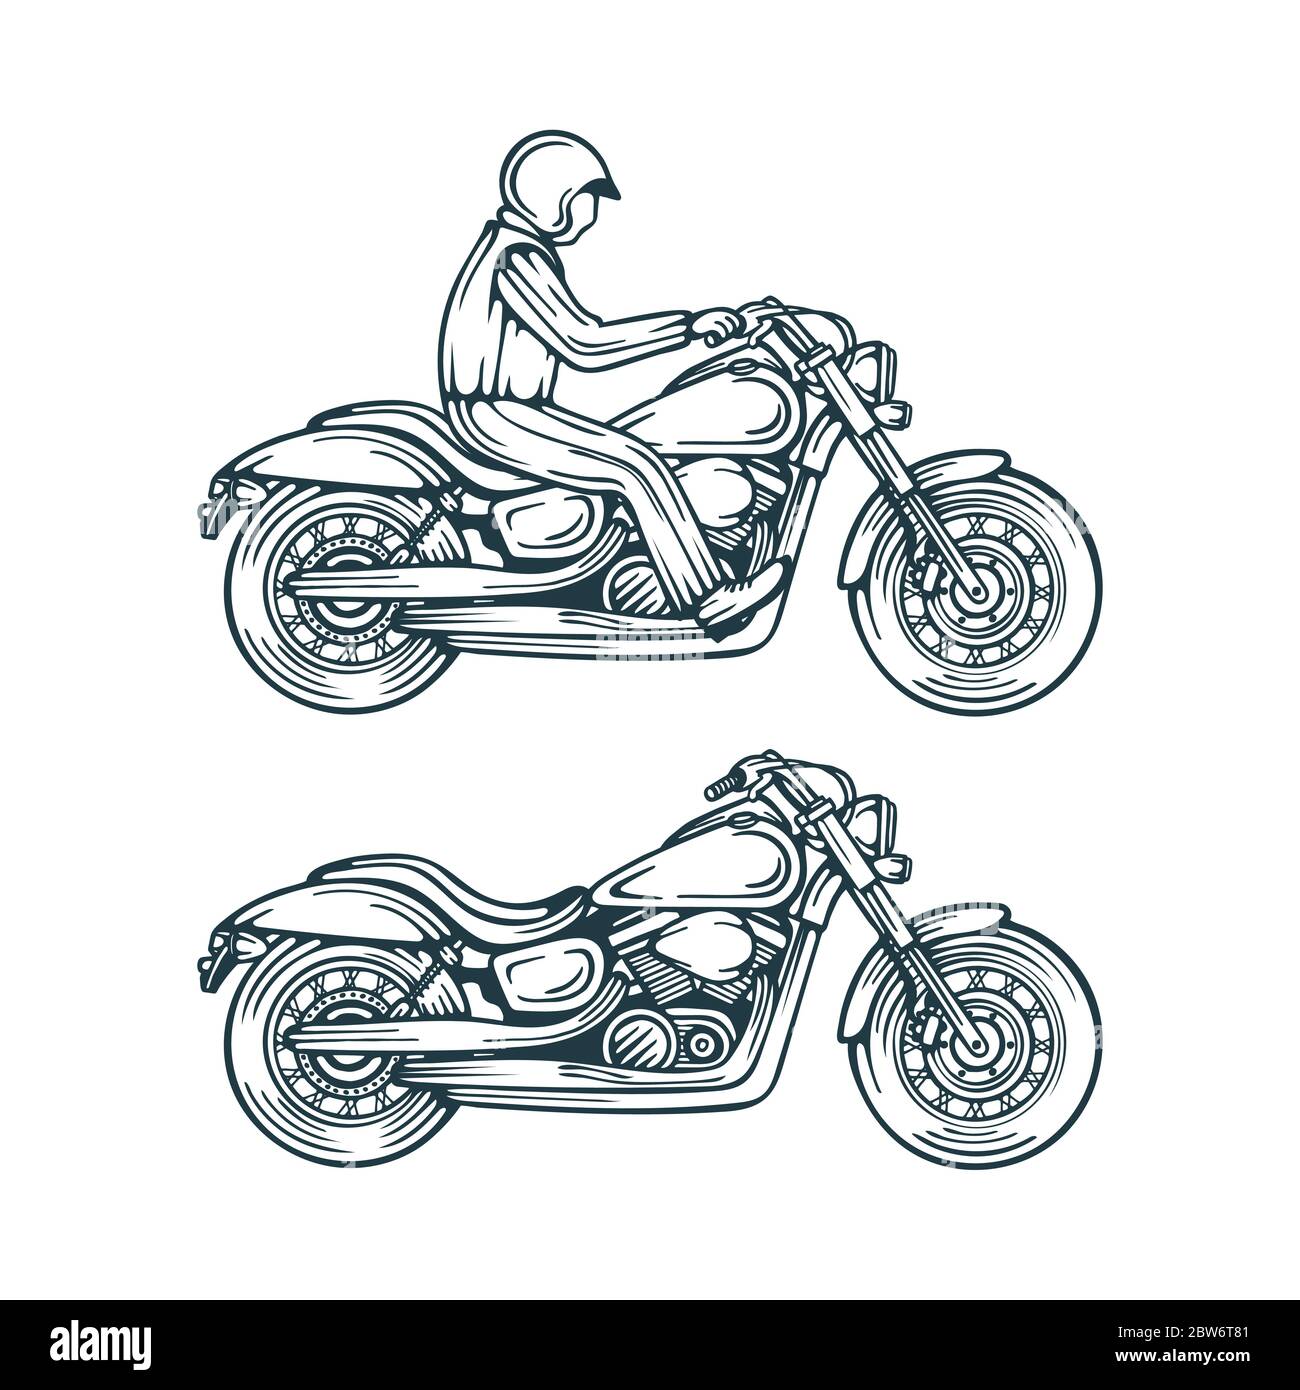 Dibujo de contorno motos fotografías e imágenes de alta resolución - Alamy